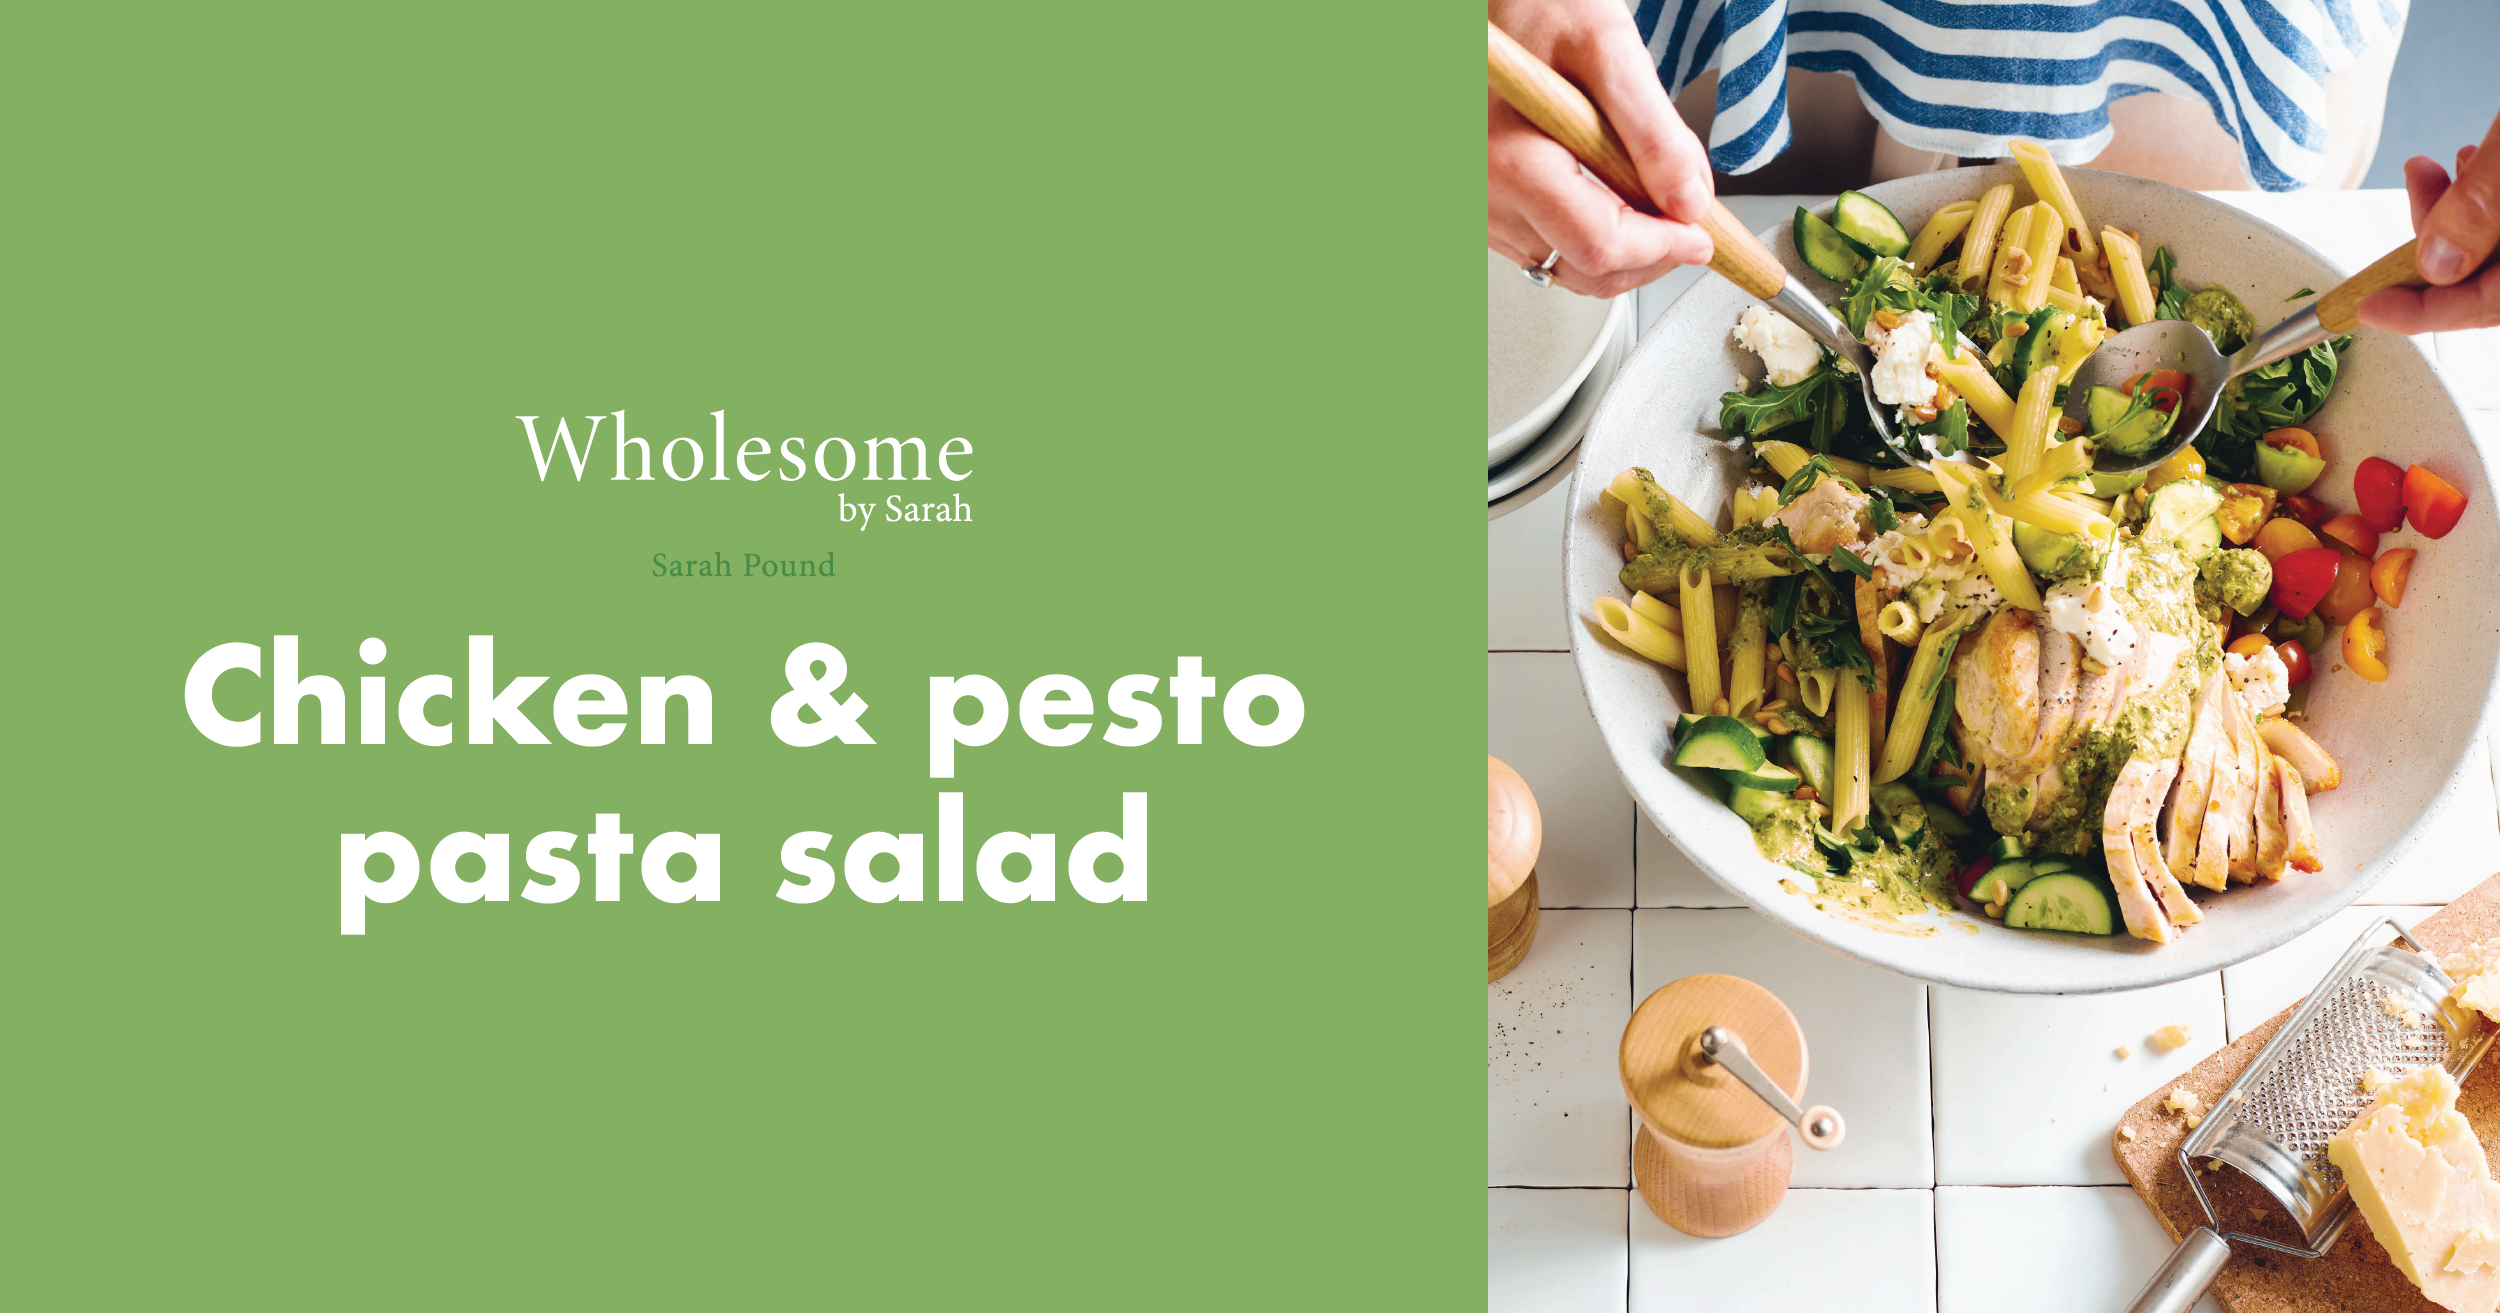 Chicken & pesto pasta salad by Sarah Pound